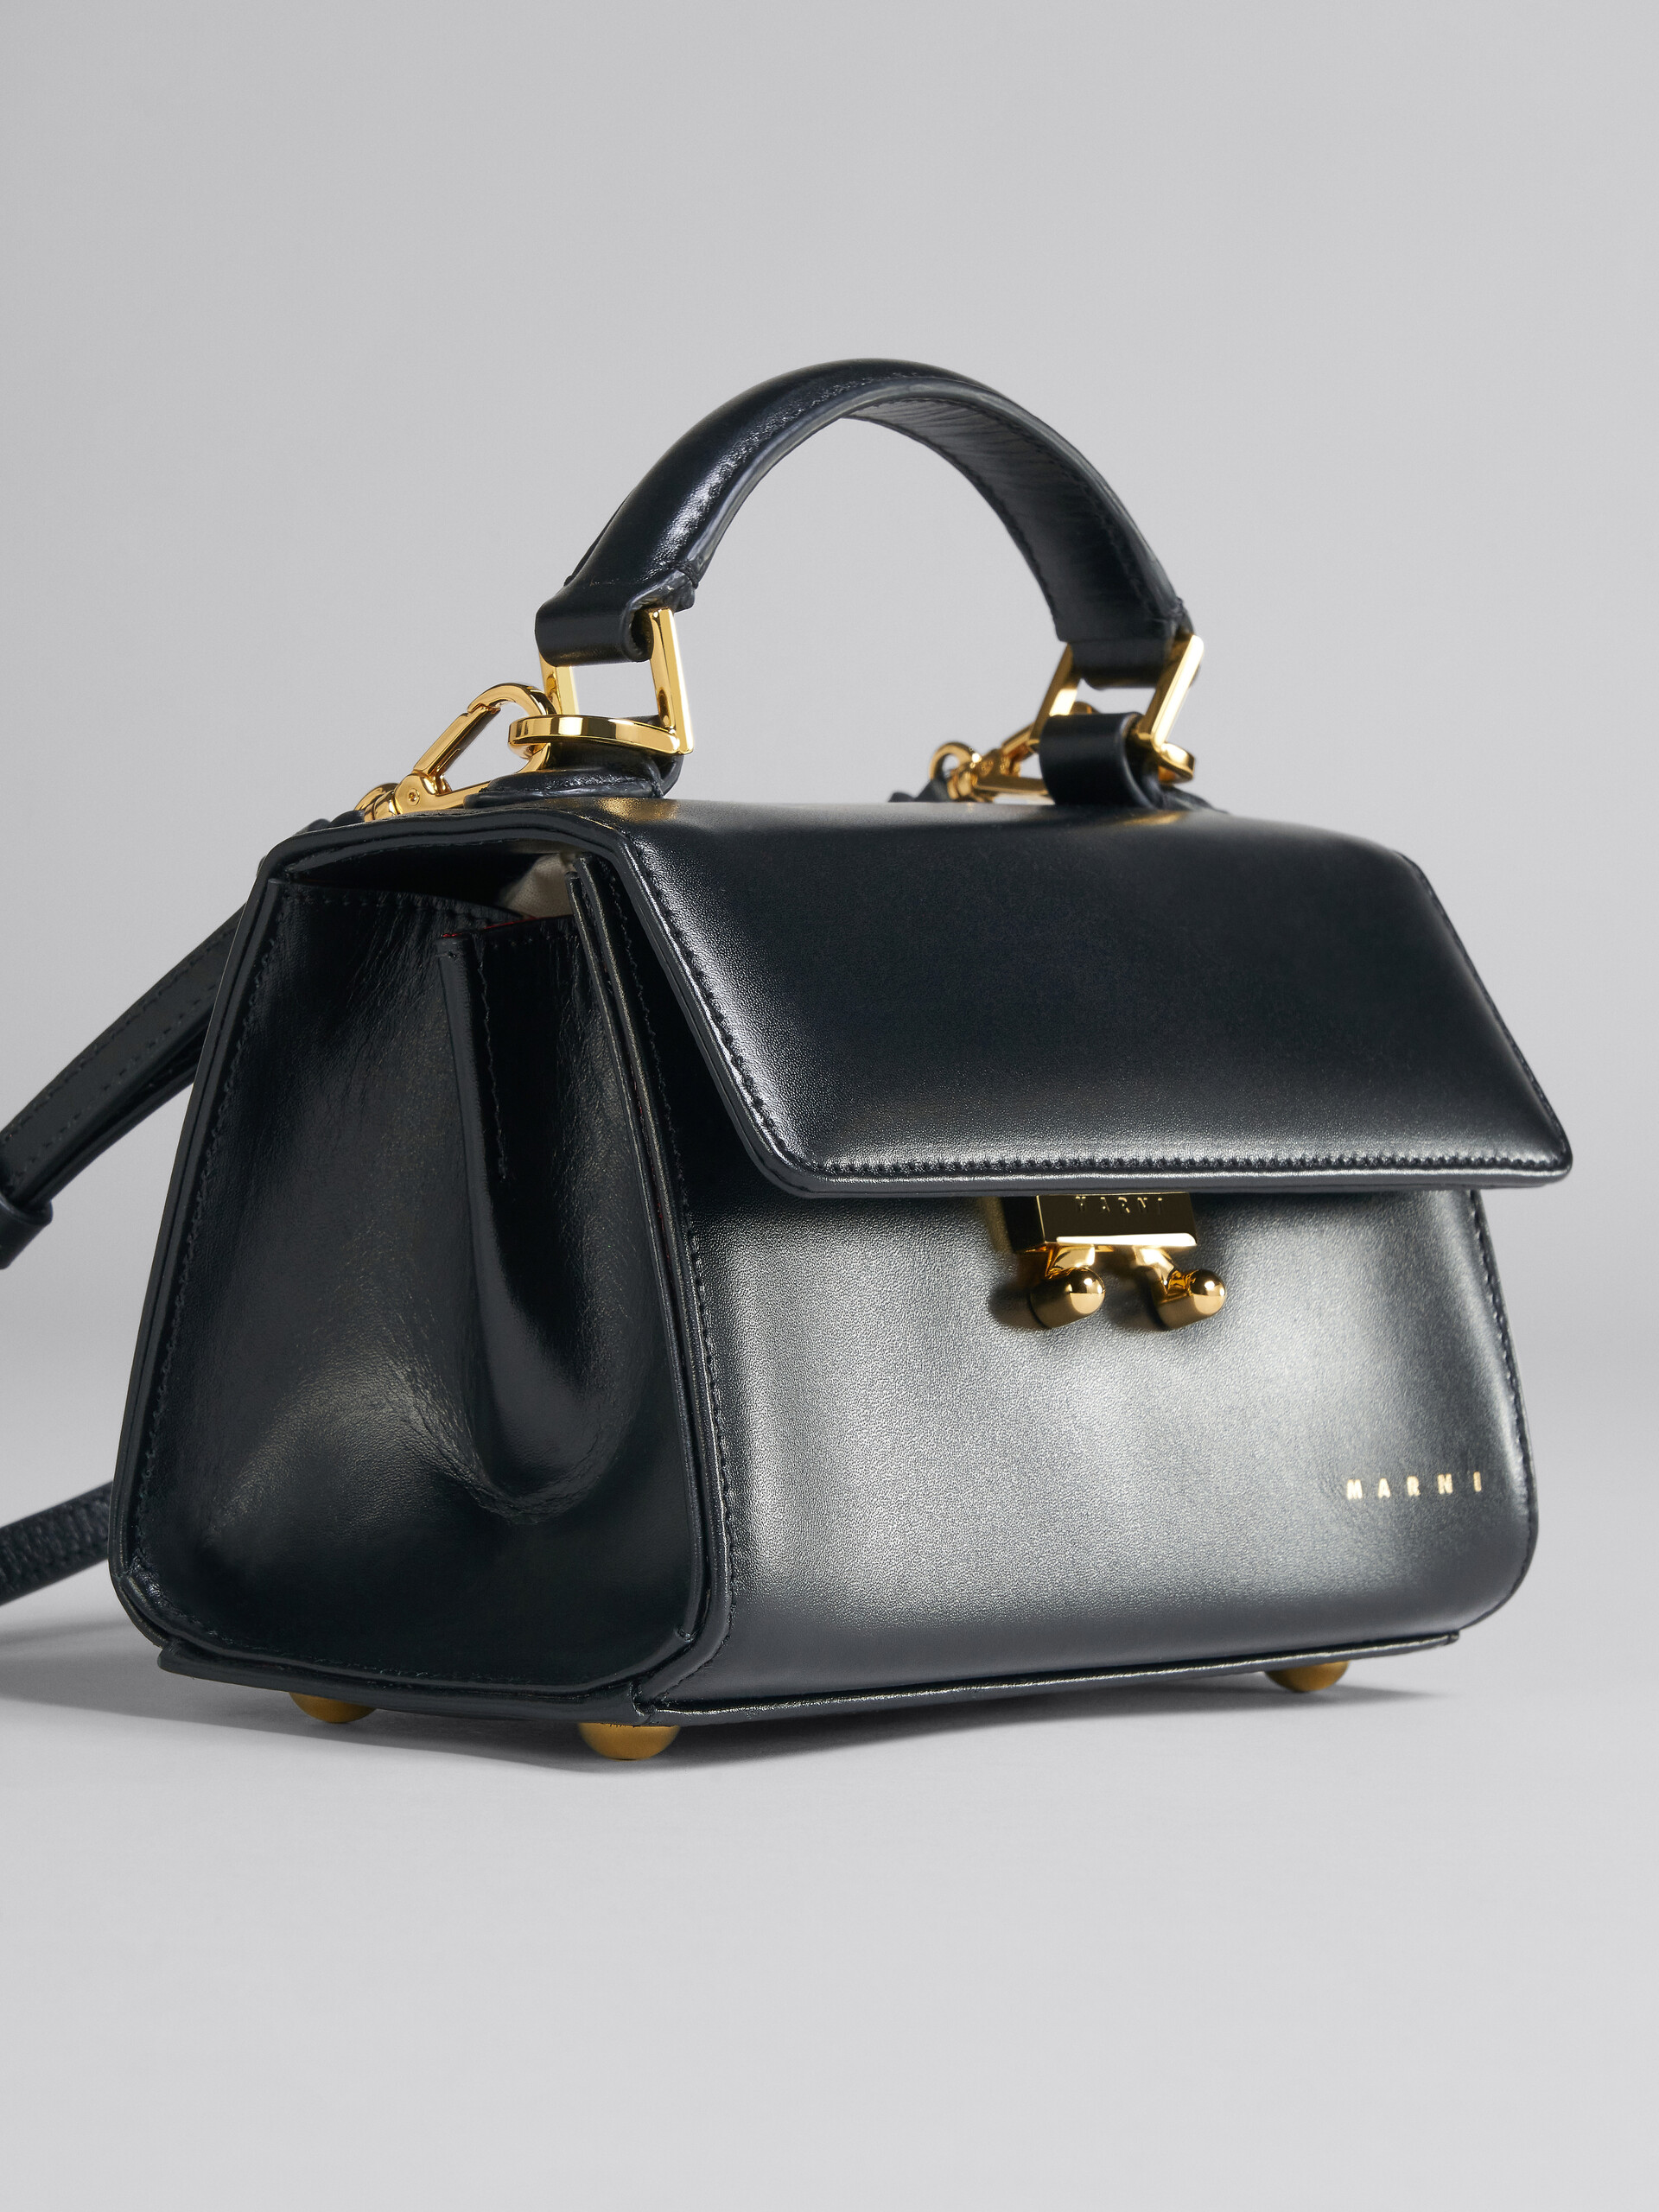 Relativity Mini Bag in black leather - Handbags - Image 5